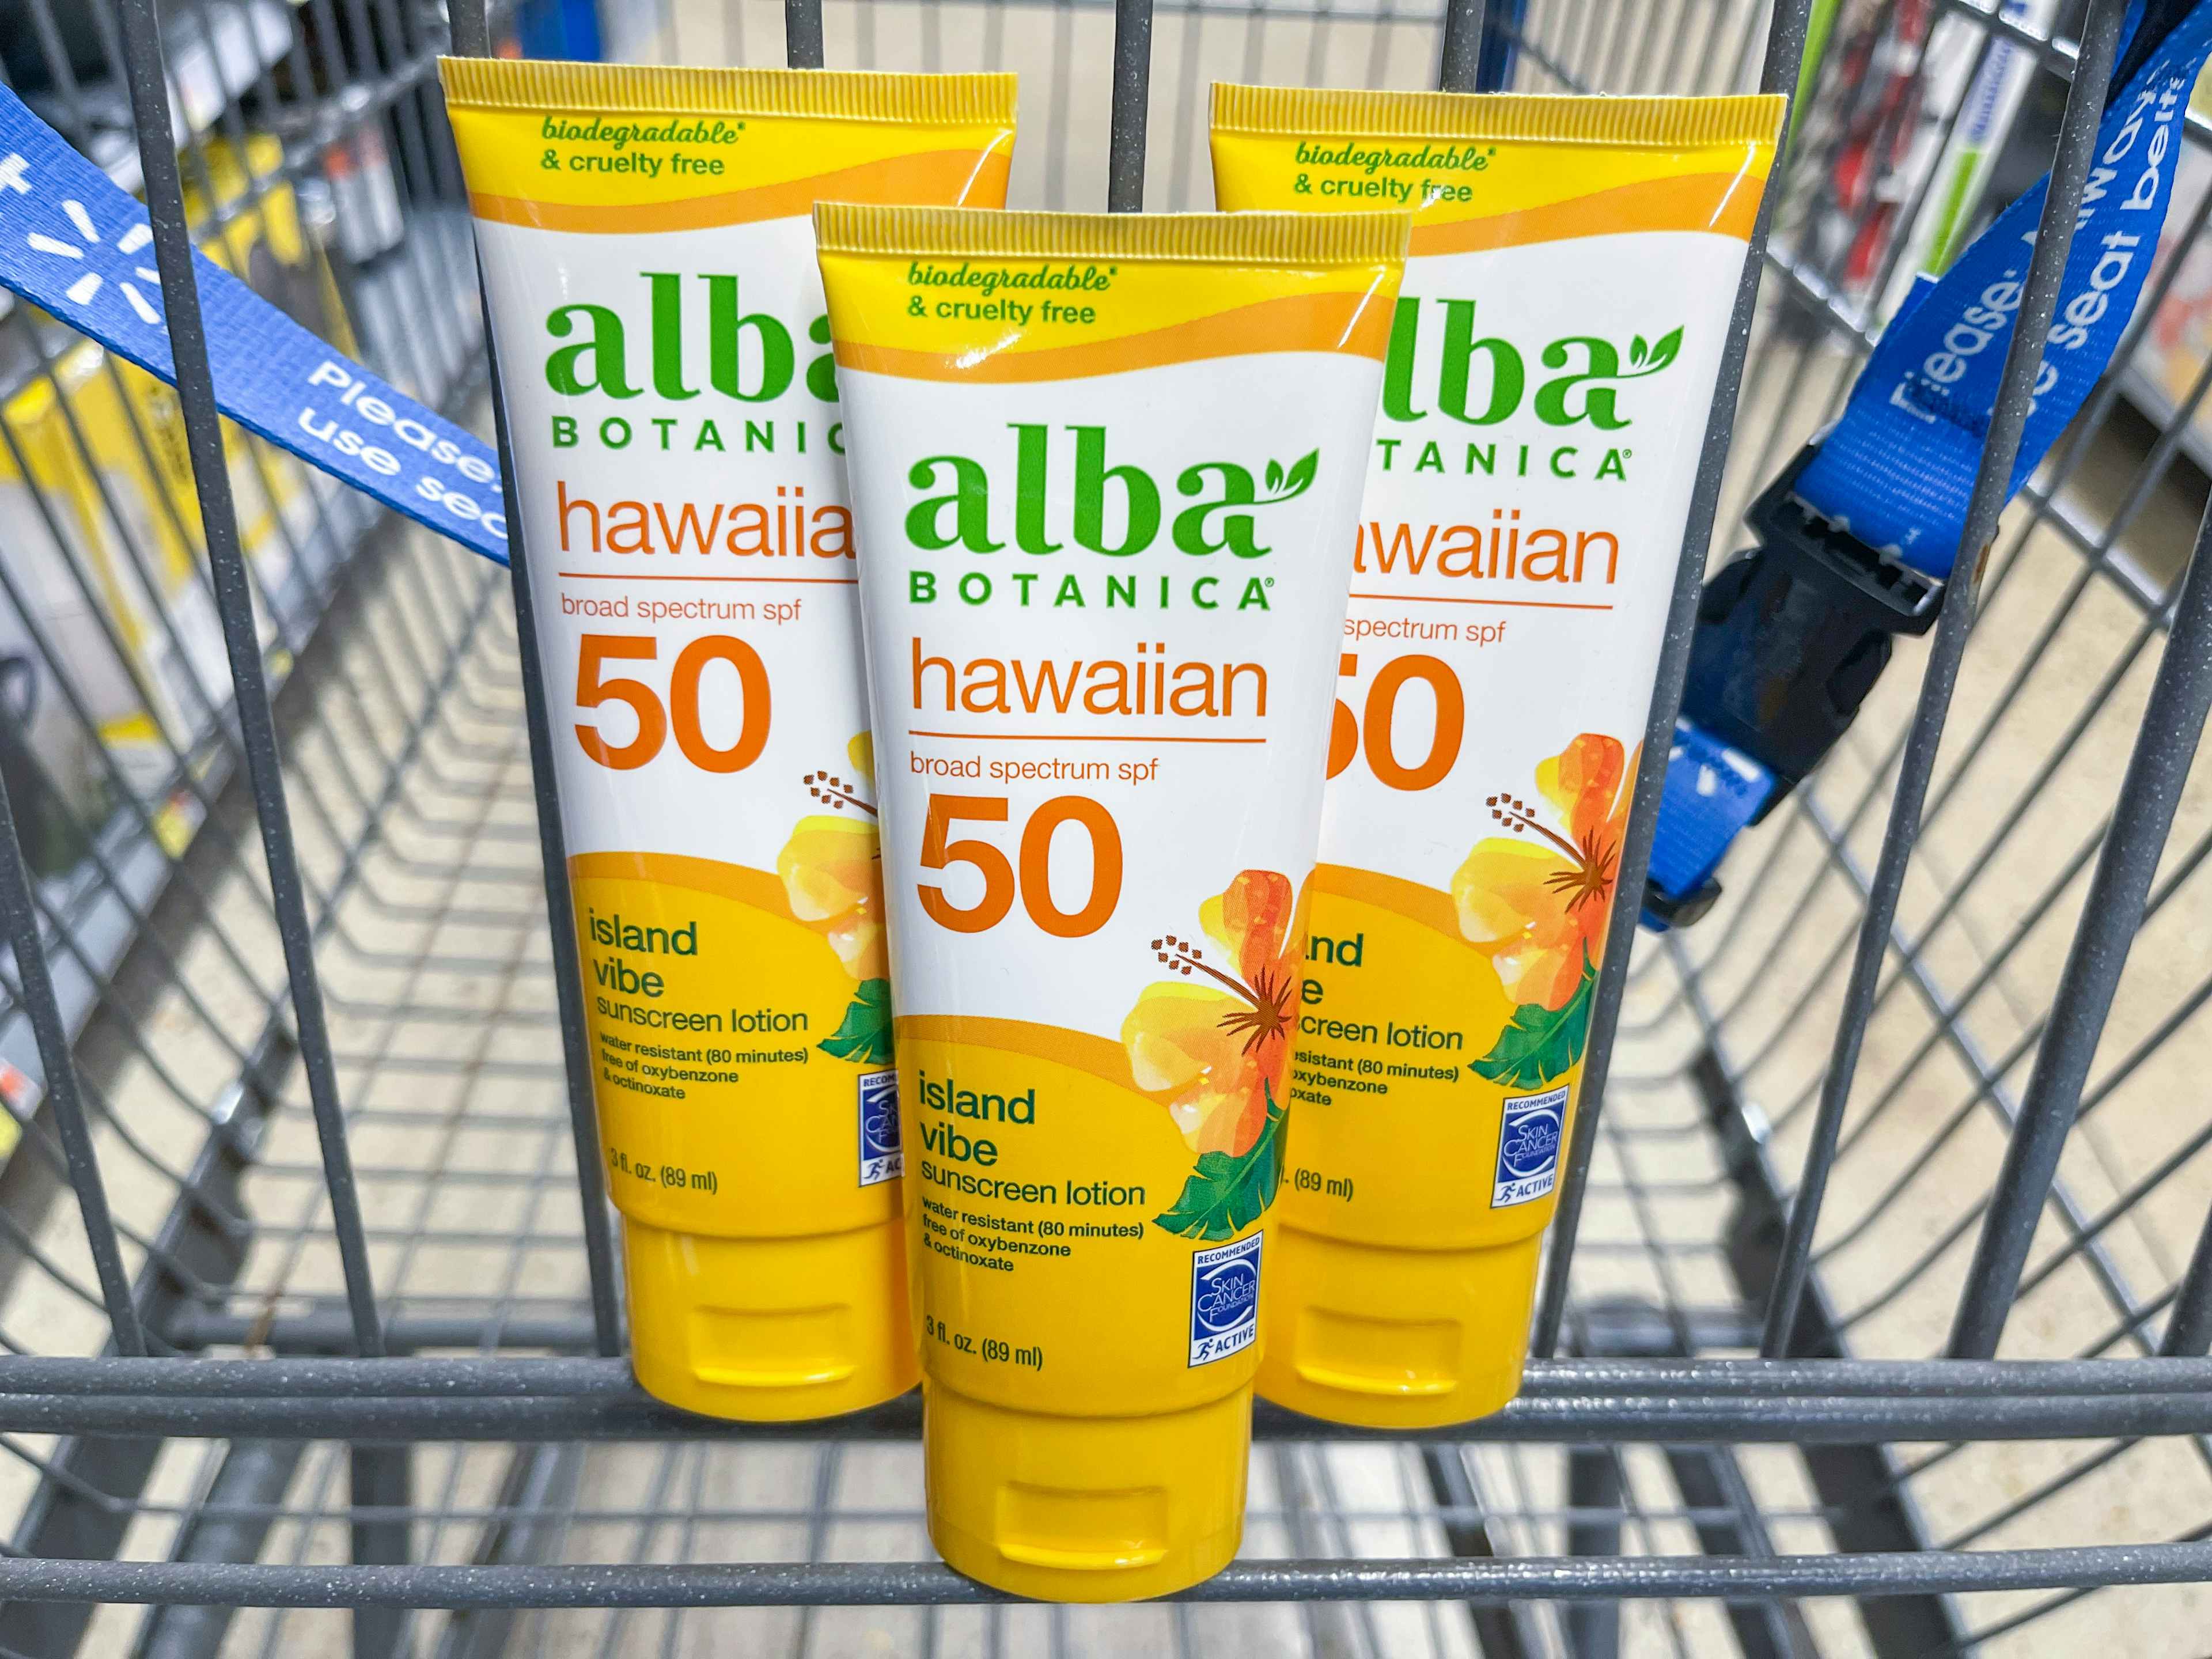 walmart-alba-botanica-hawaiin-sunscreen-2